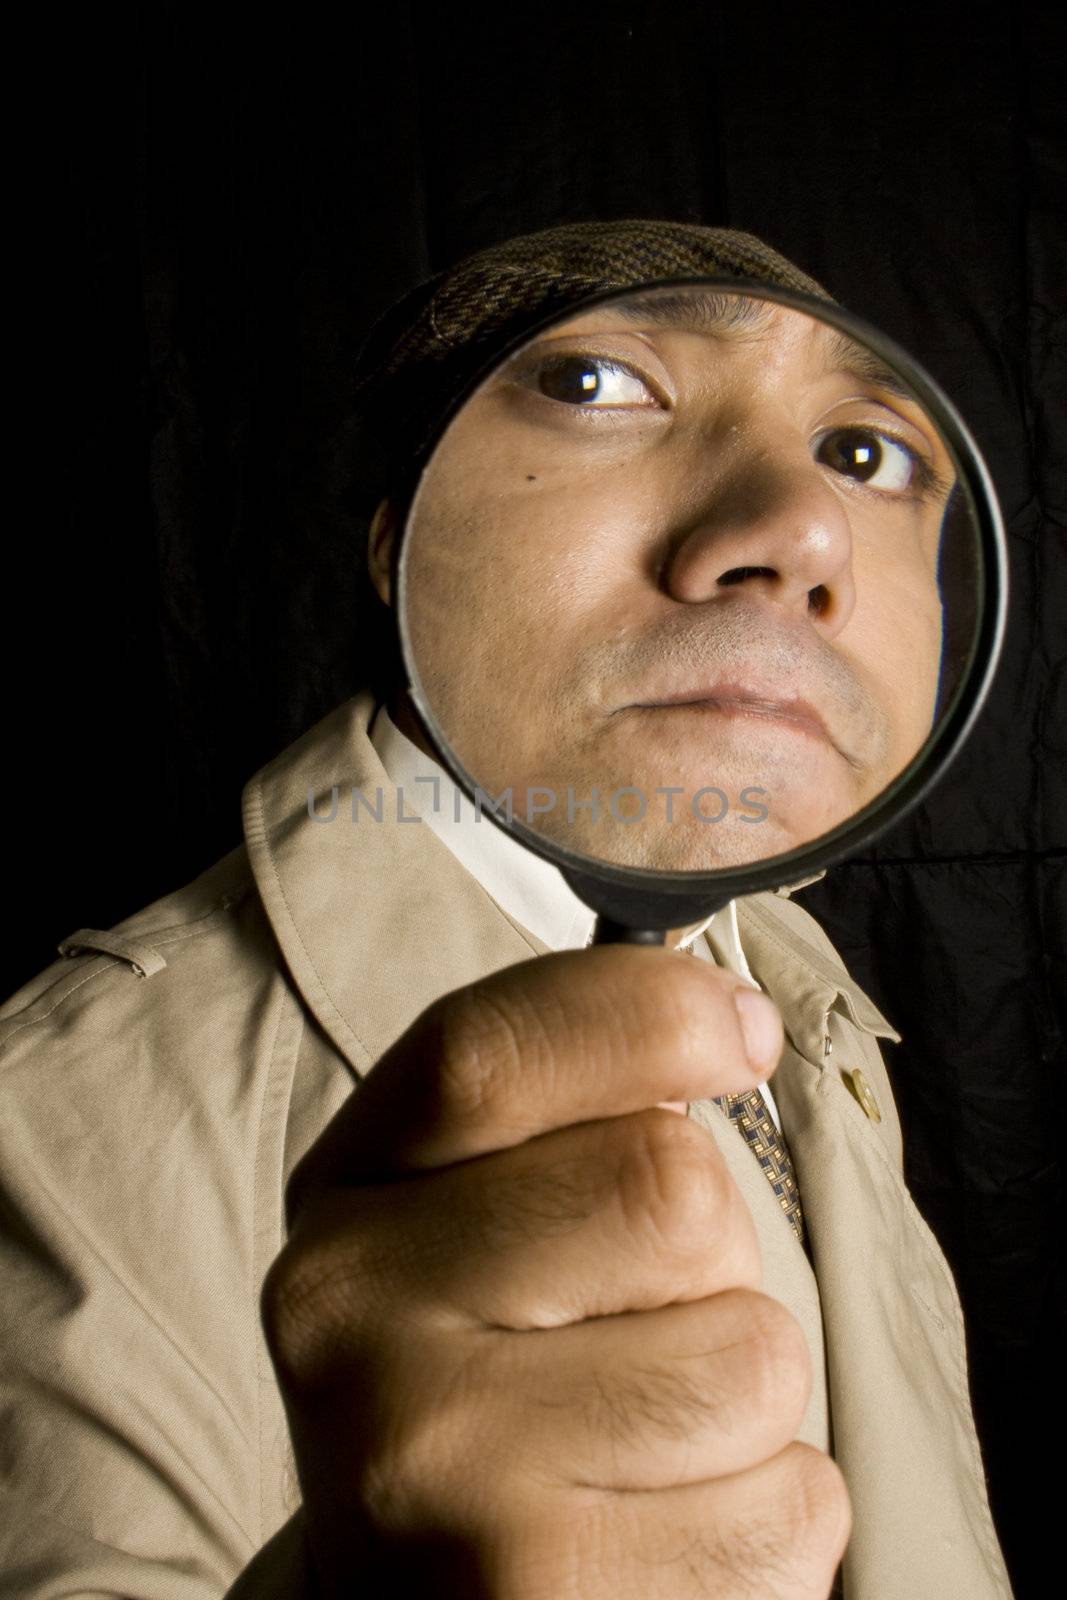 Detective looking through eye glass